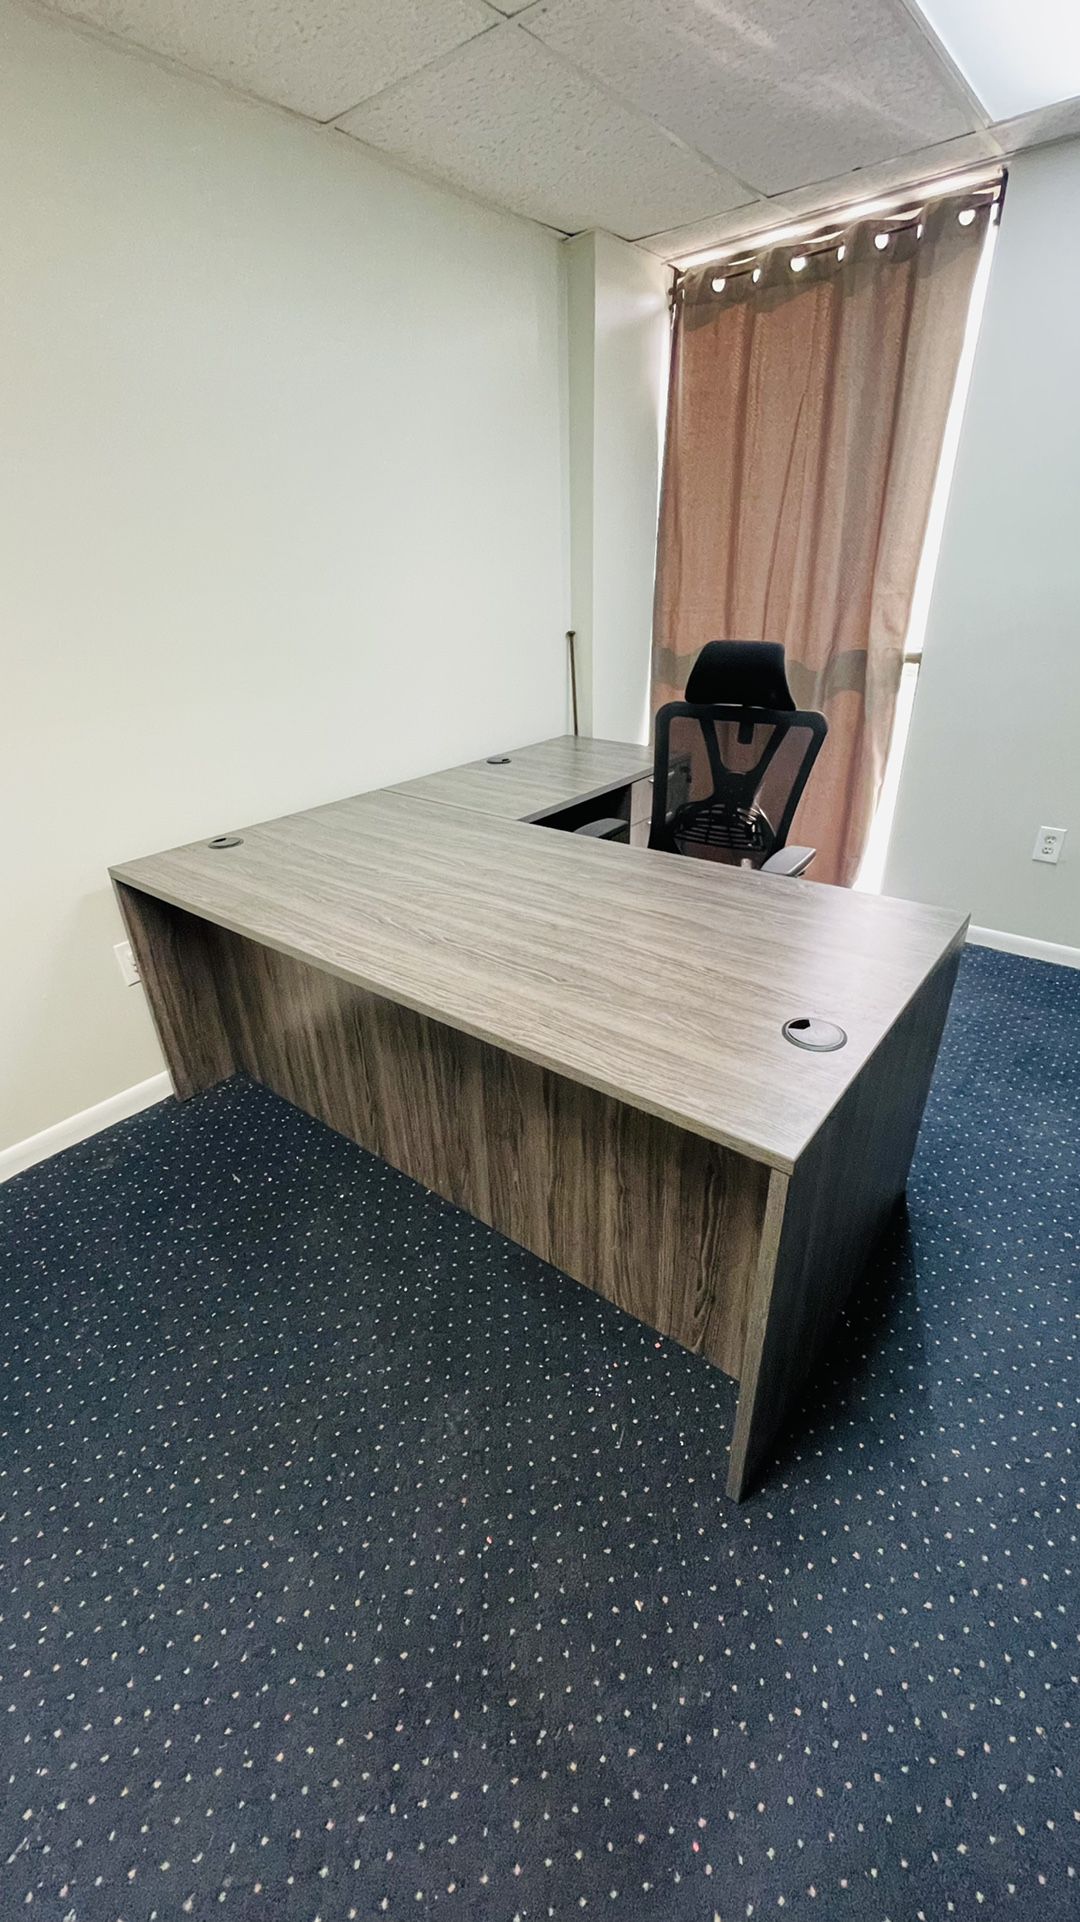 Office Desk Plus 3 Chairs 